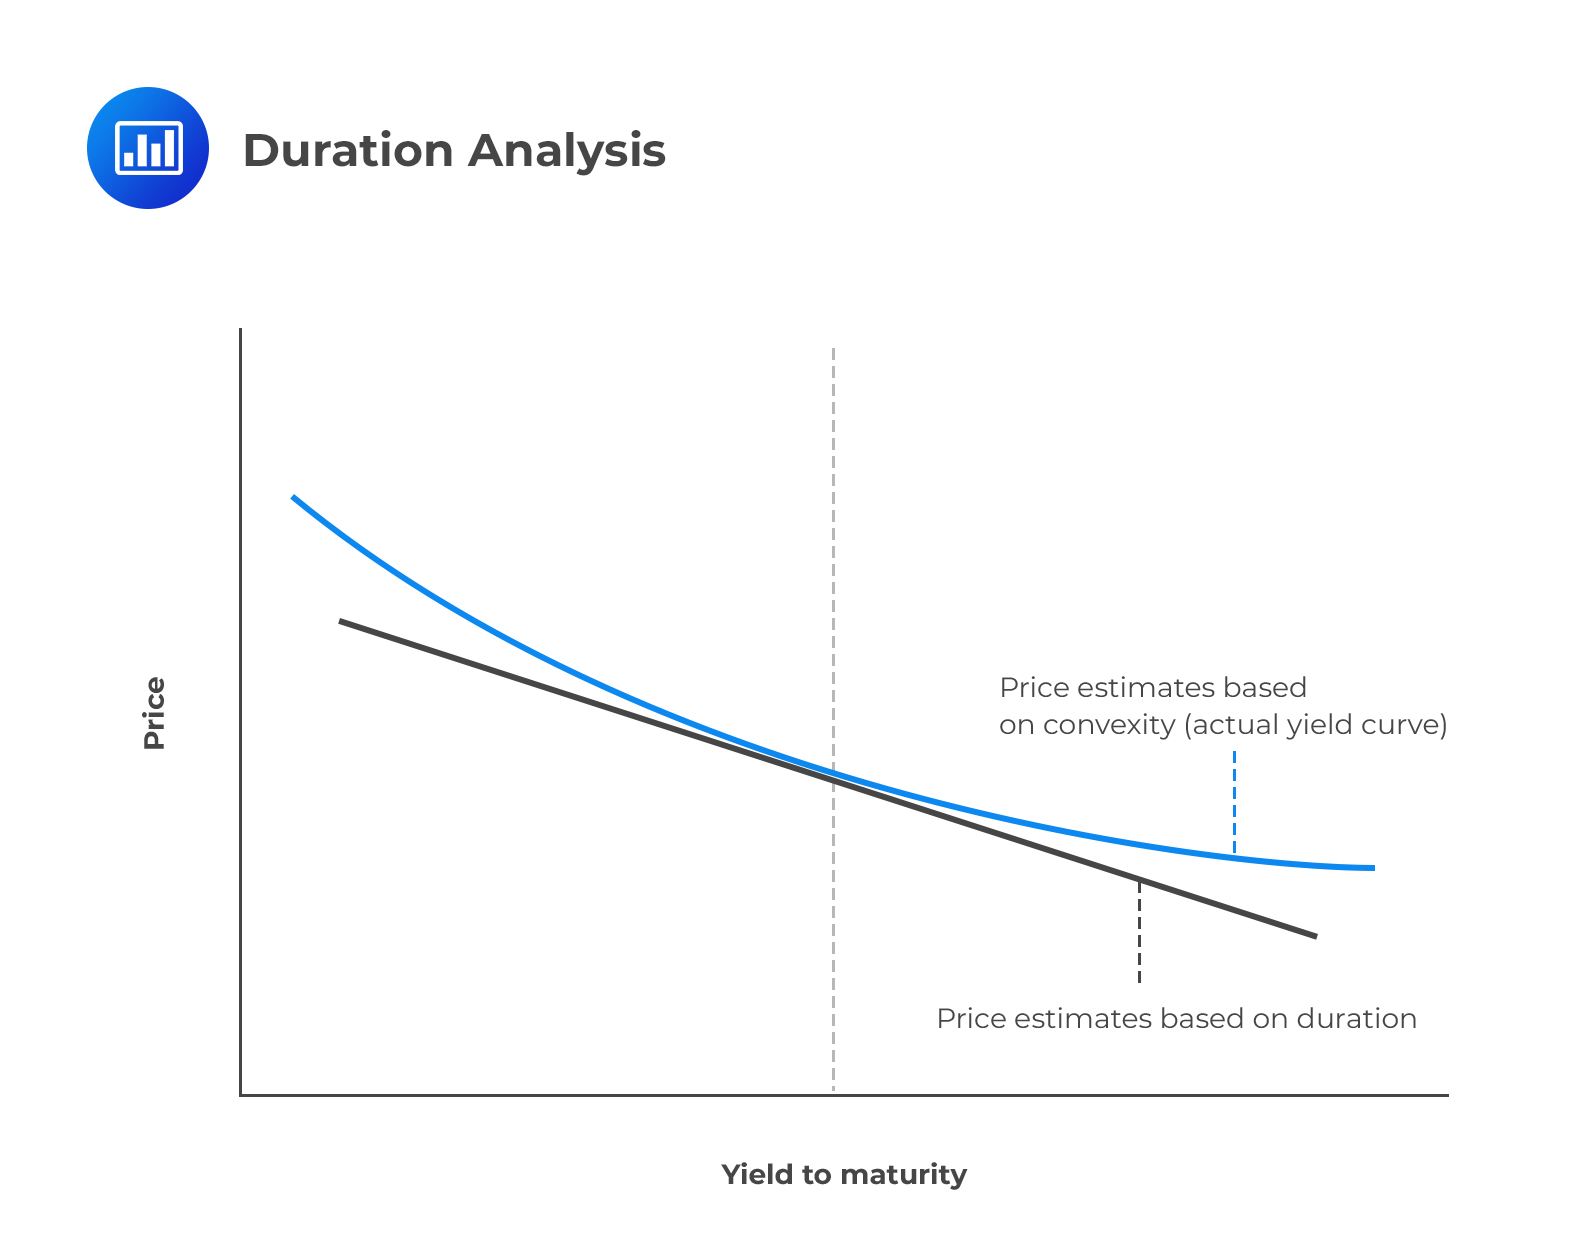 Duration Analysis